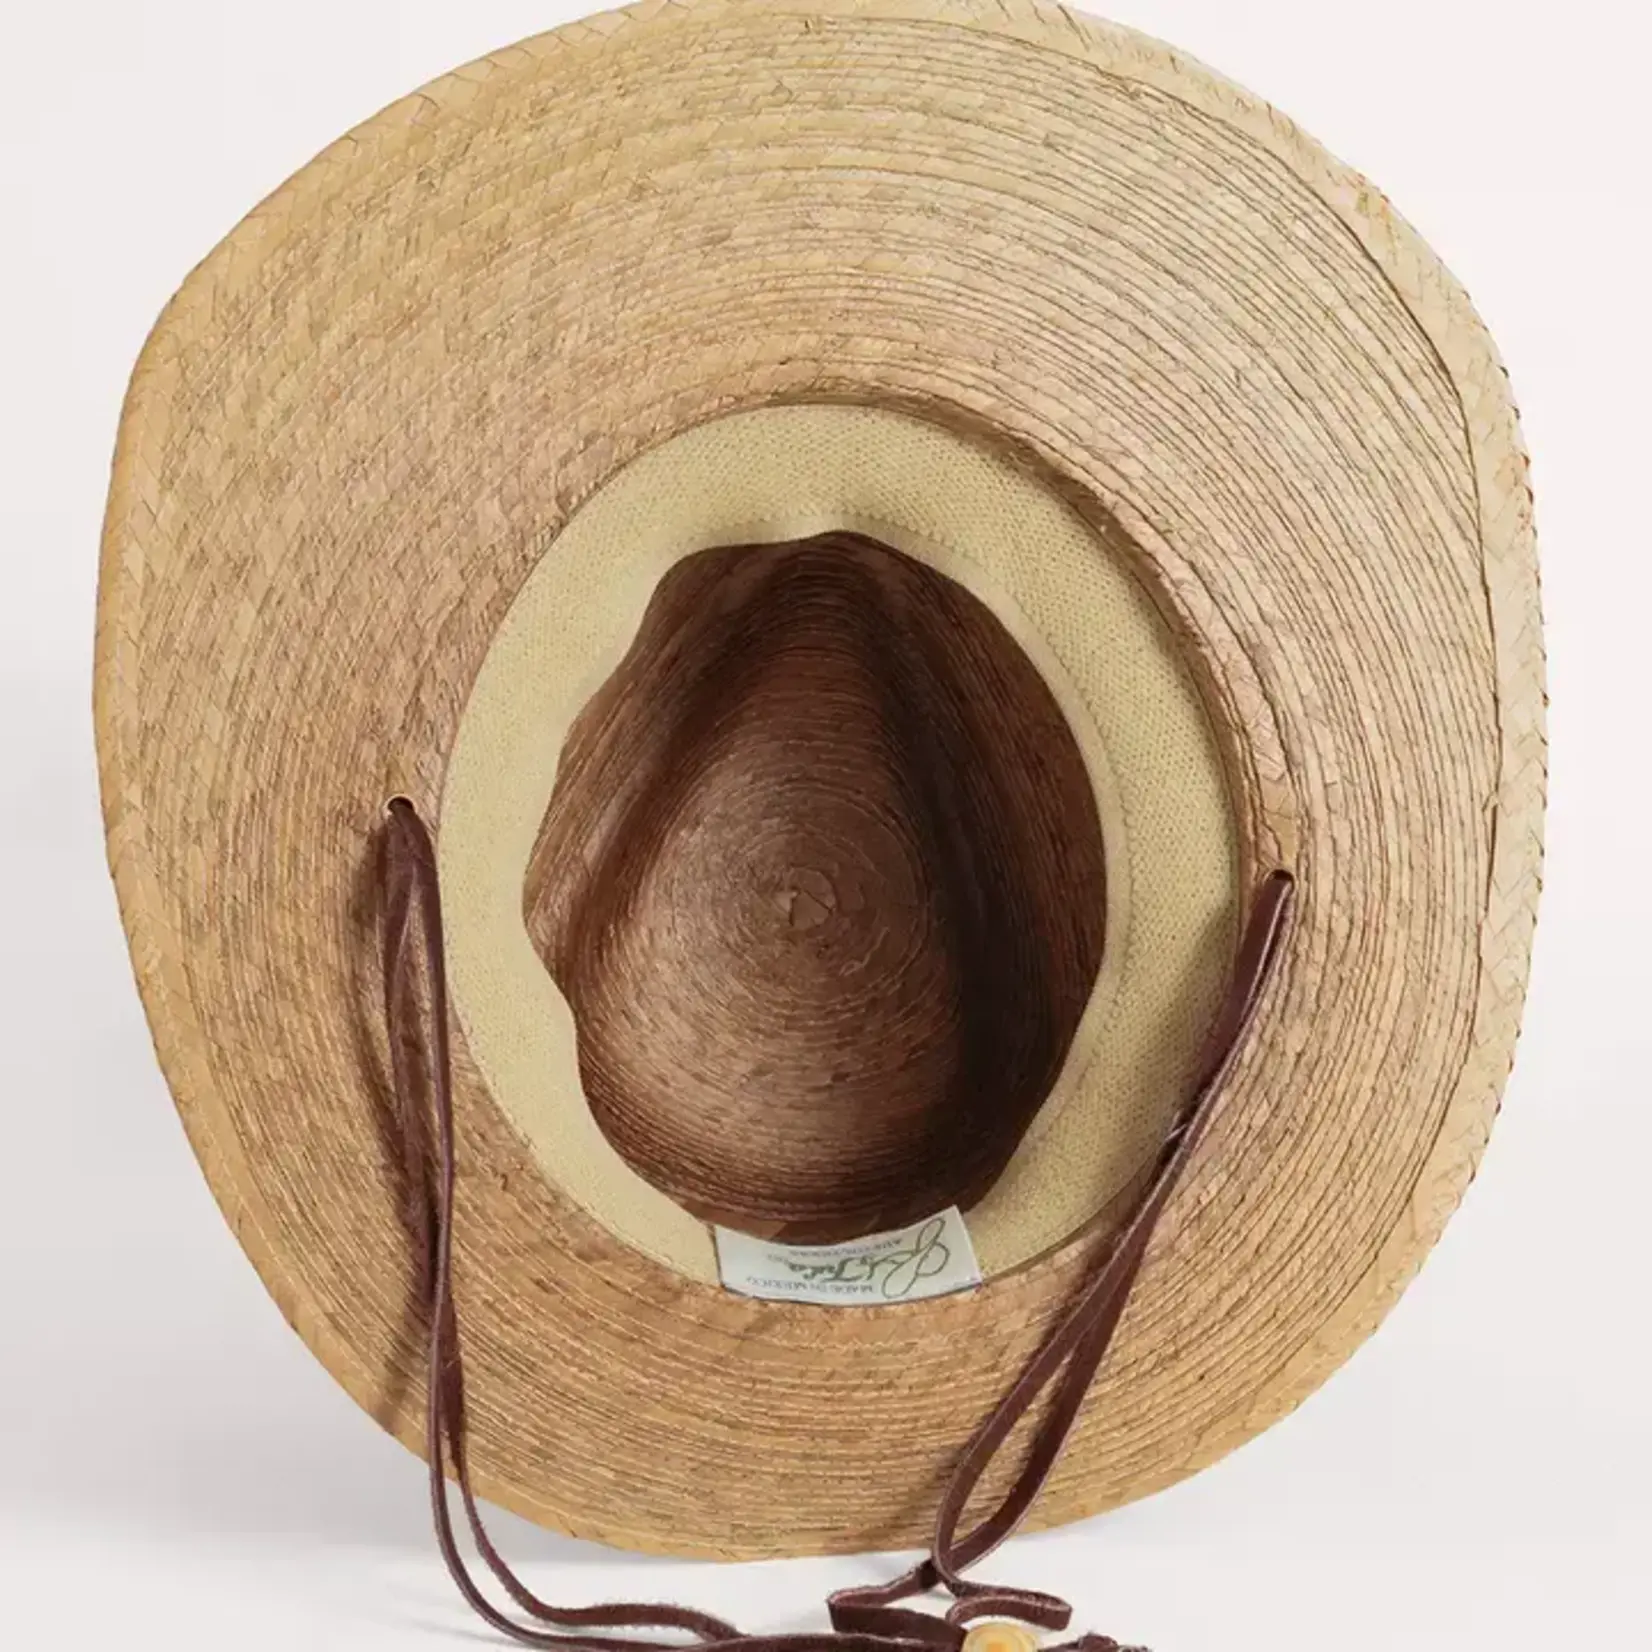 Tula Hats Angler Hat Small/Med